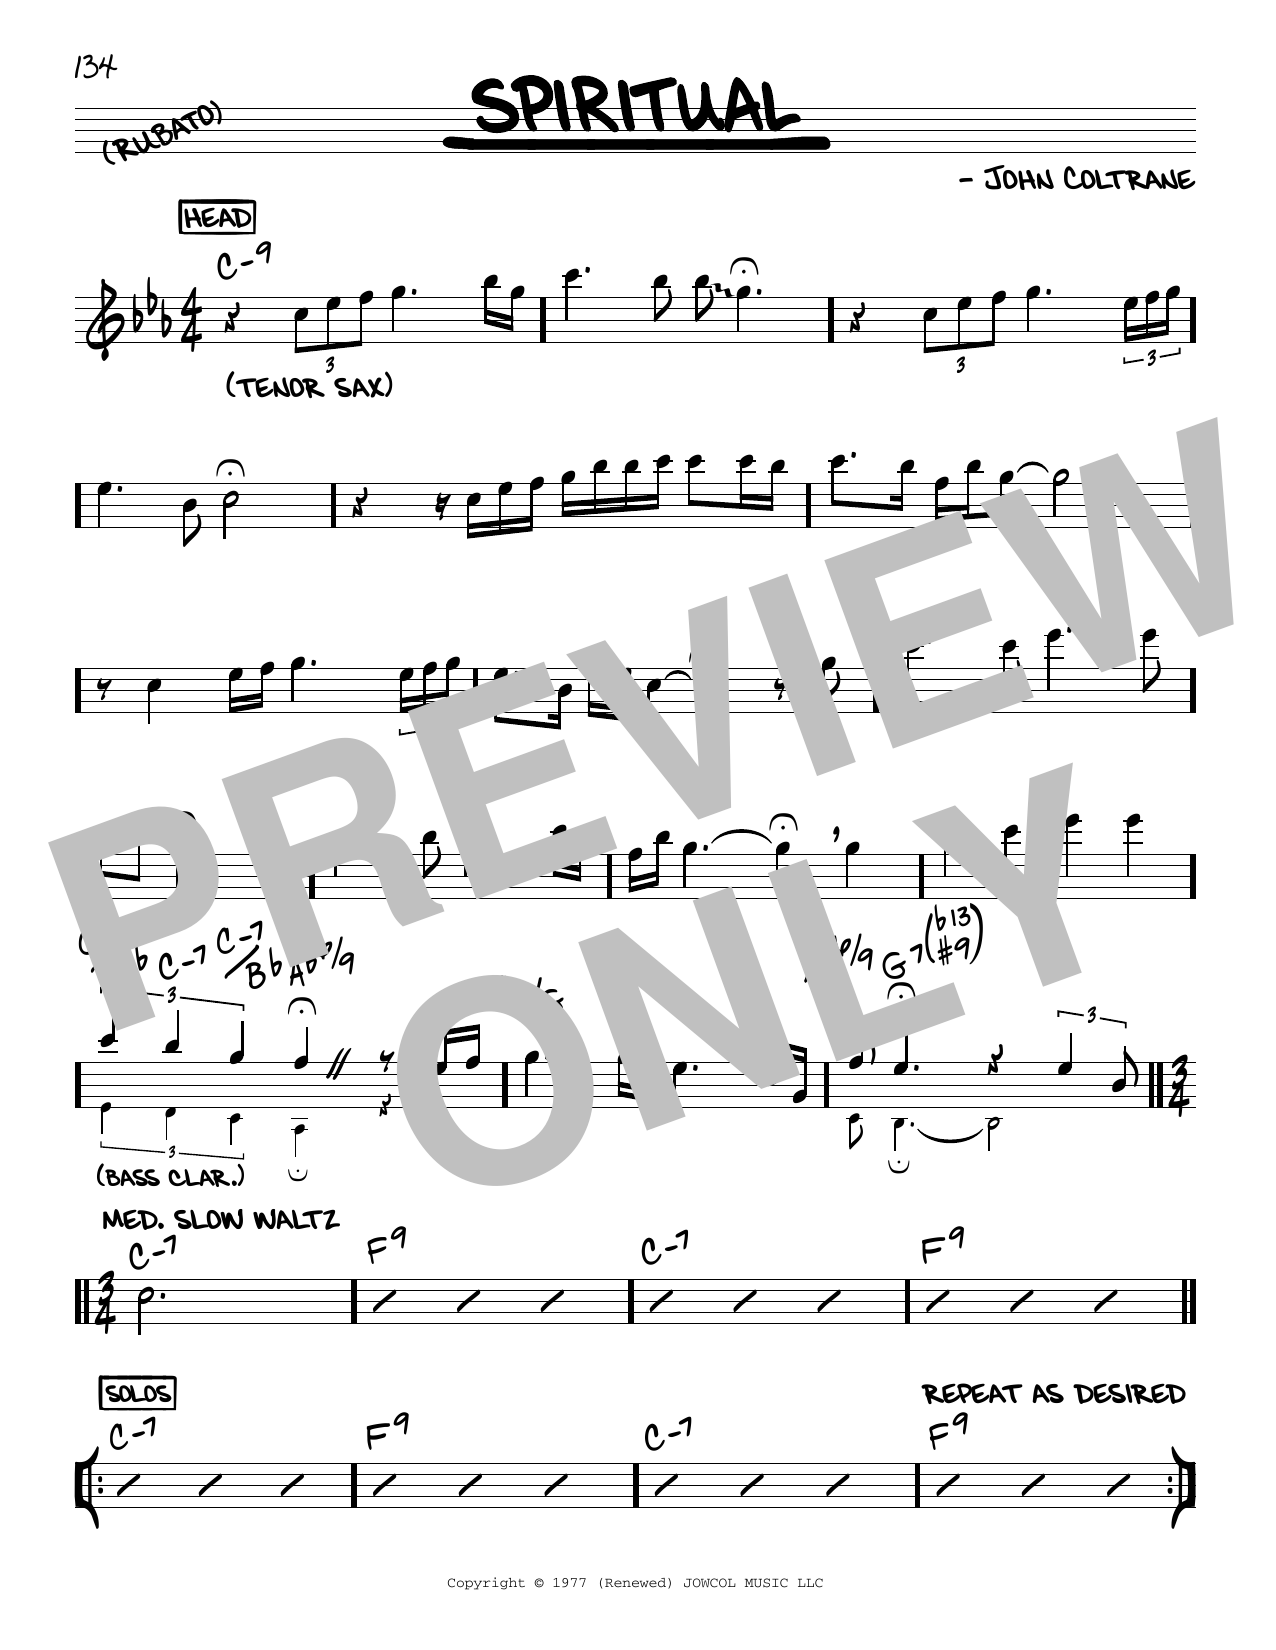 John Coltrane Spiritual Sheet Music Notes & Chords for Real Book – Melody & Chords - Download or Print PDF